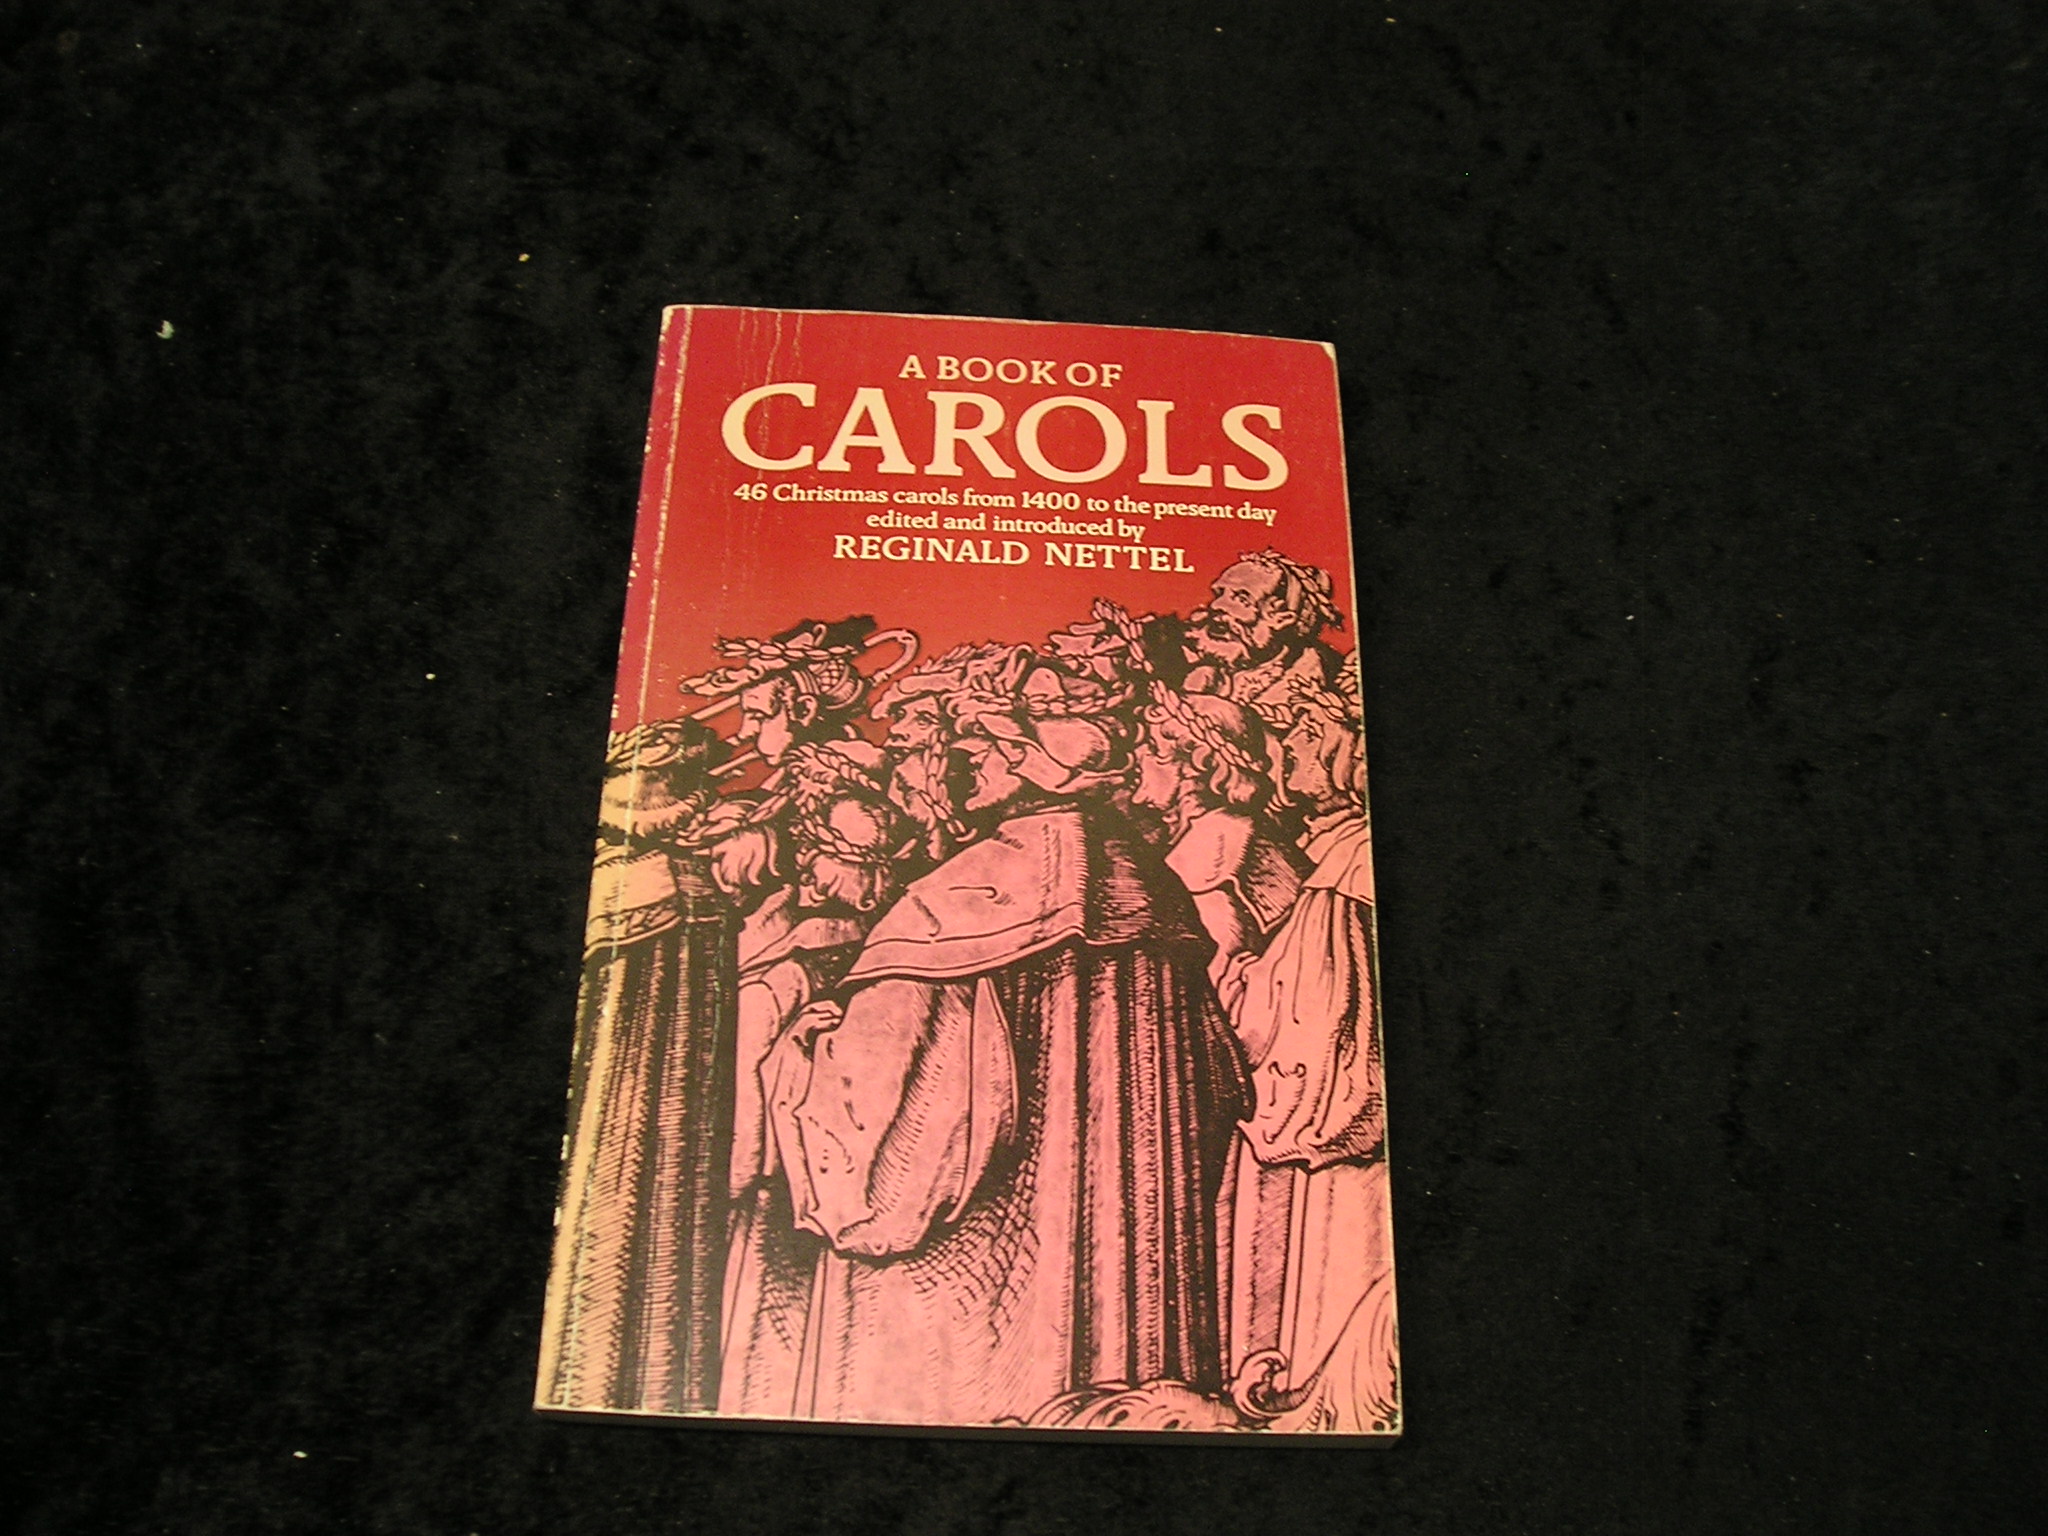 A Book of Carols